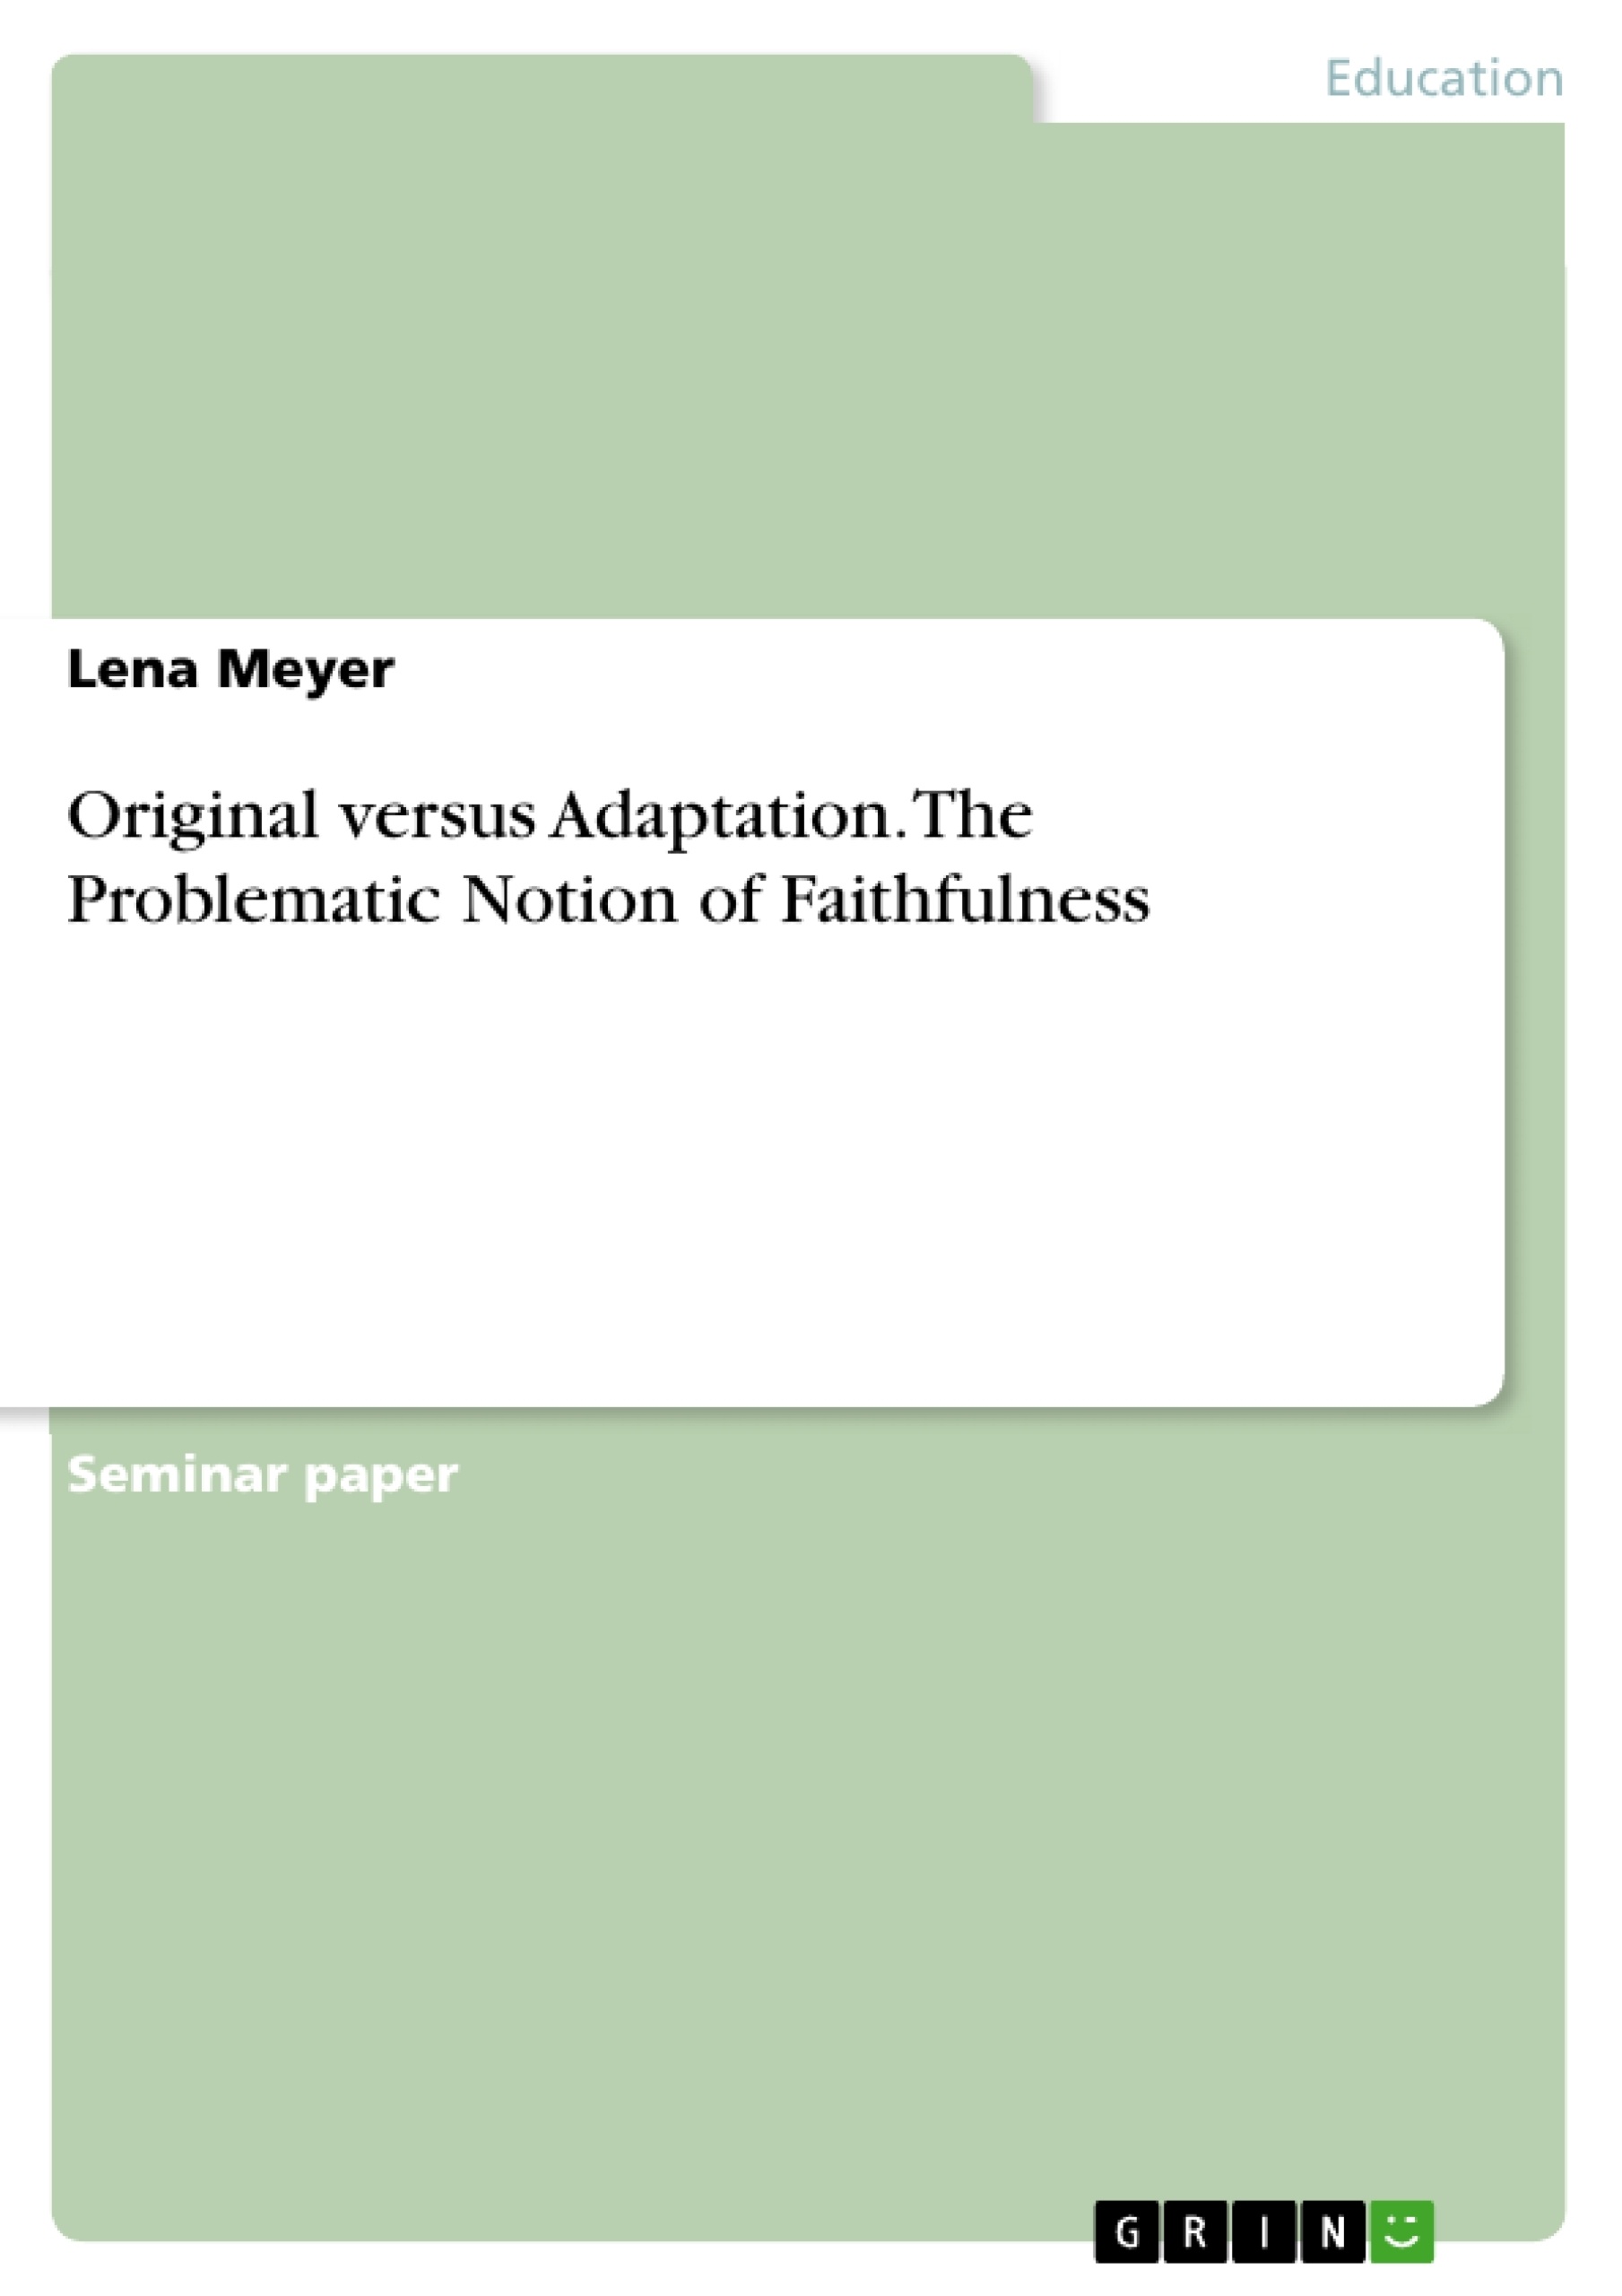 Title: Original versus Adaptation. The Problematic Notion of Faithfulness